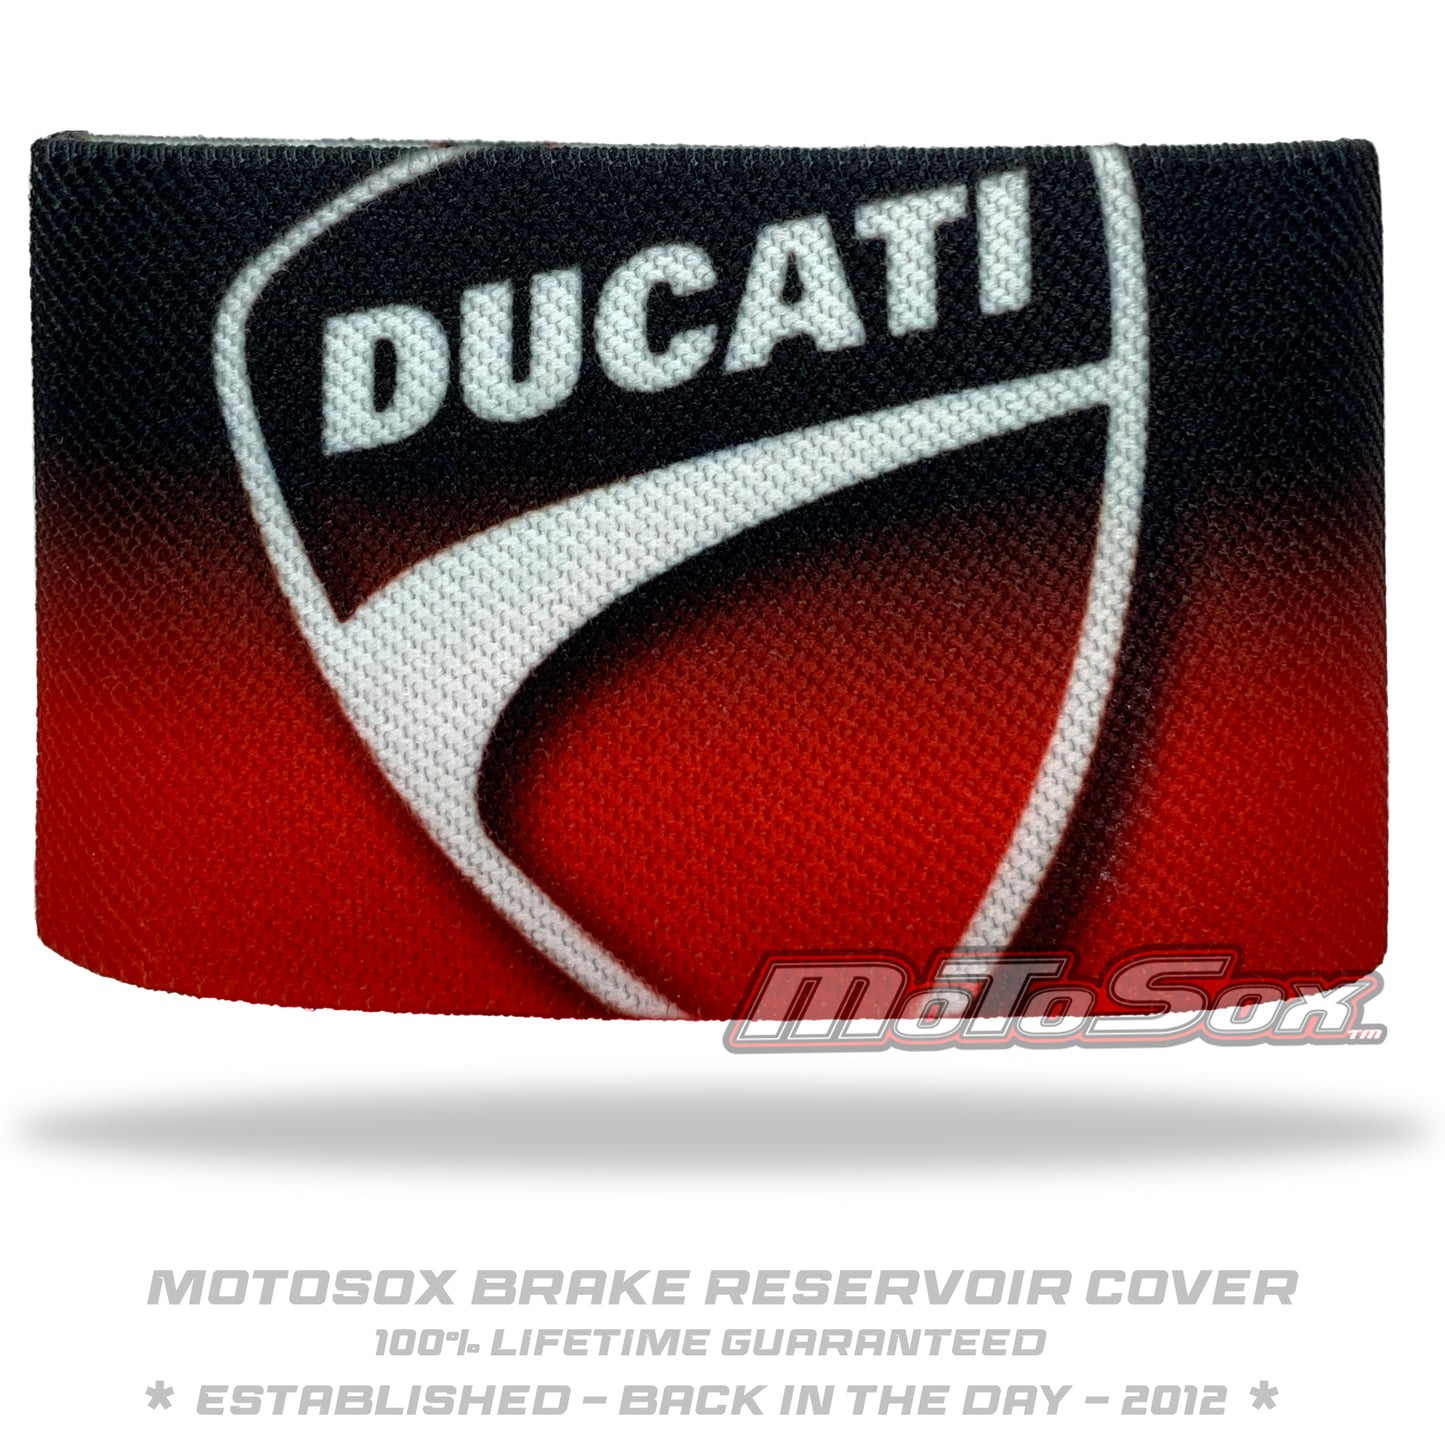 Ducati Brake Reservoir Sock Faded series